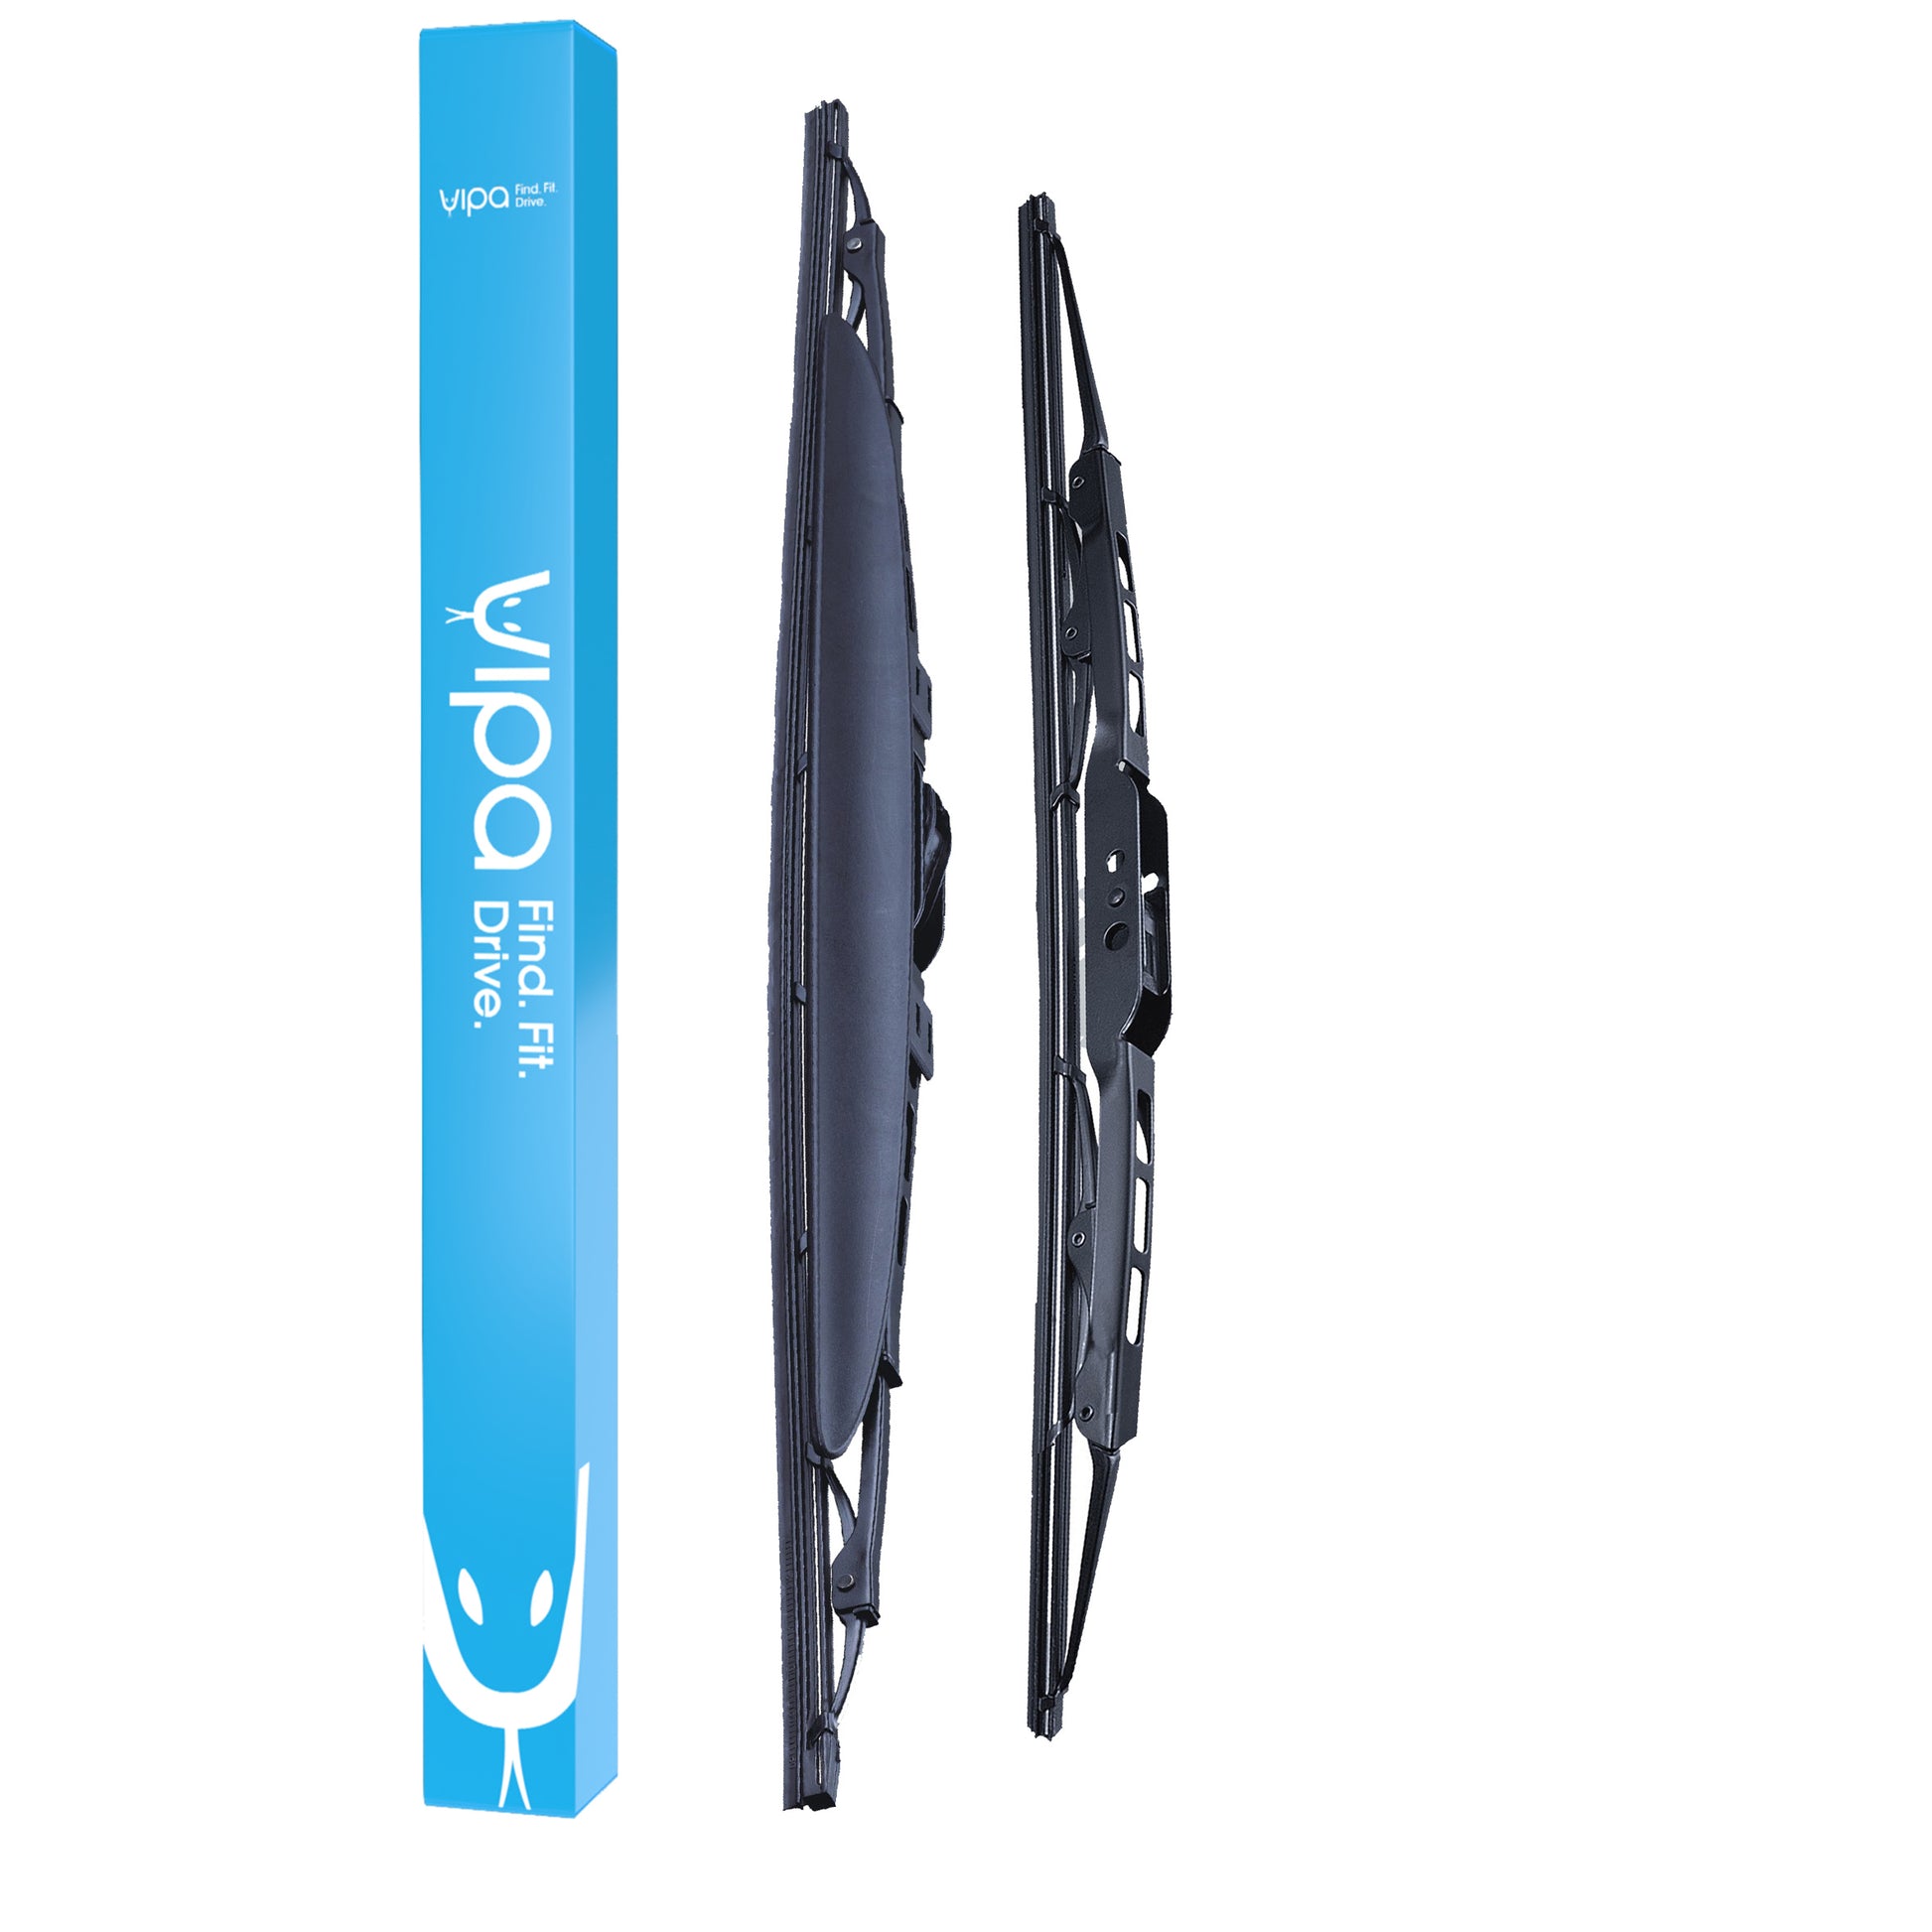 VAUXHALL VIVARO MPV Jan 2006 to May 2015 Wiper Blade Kit